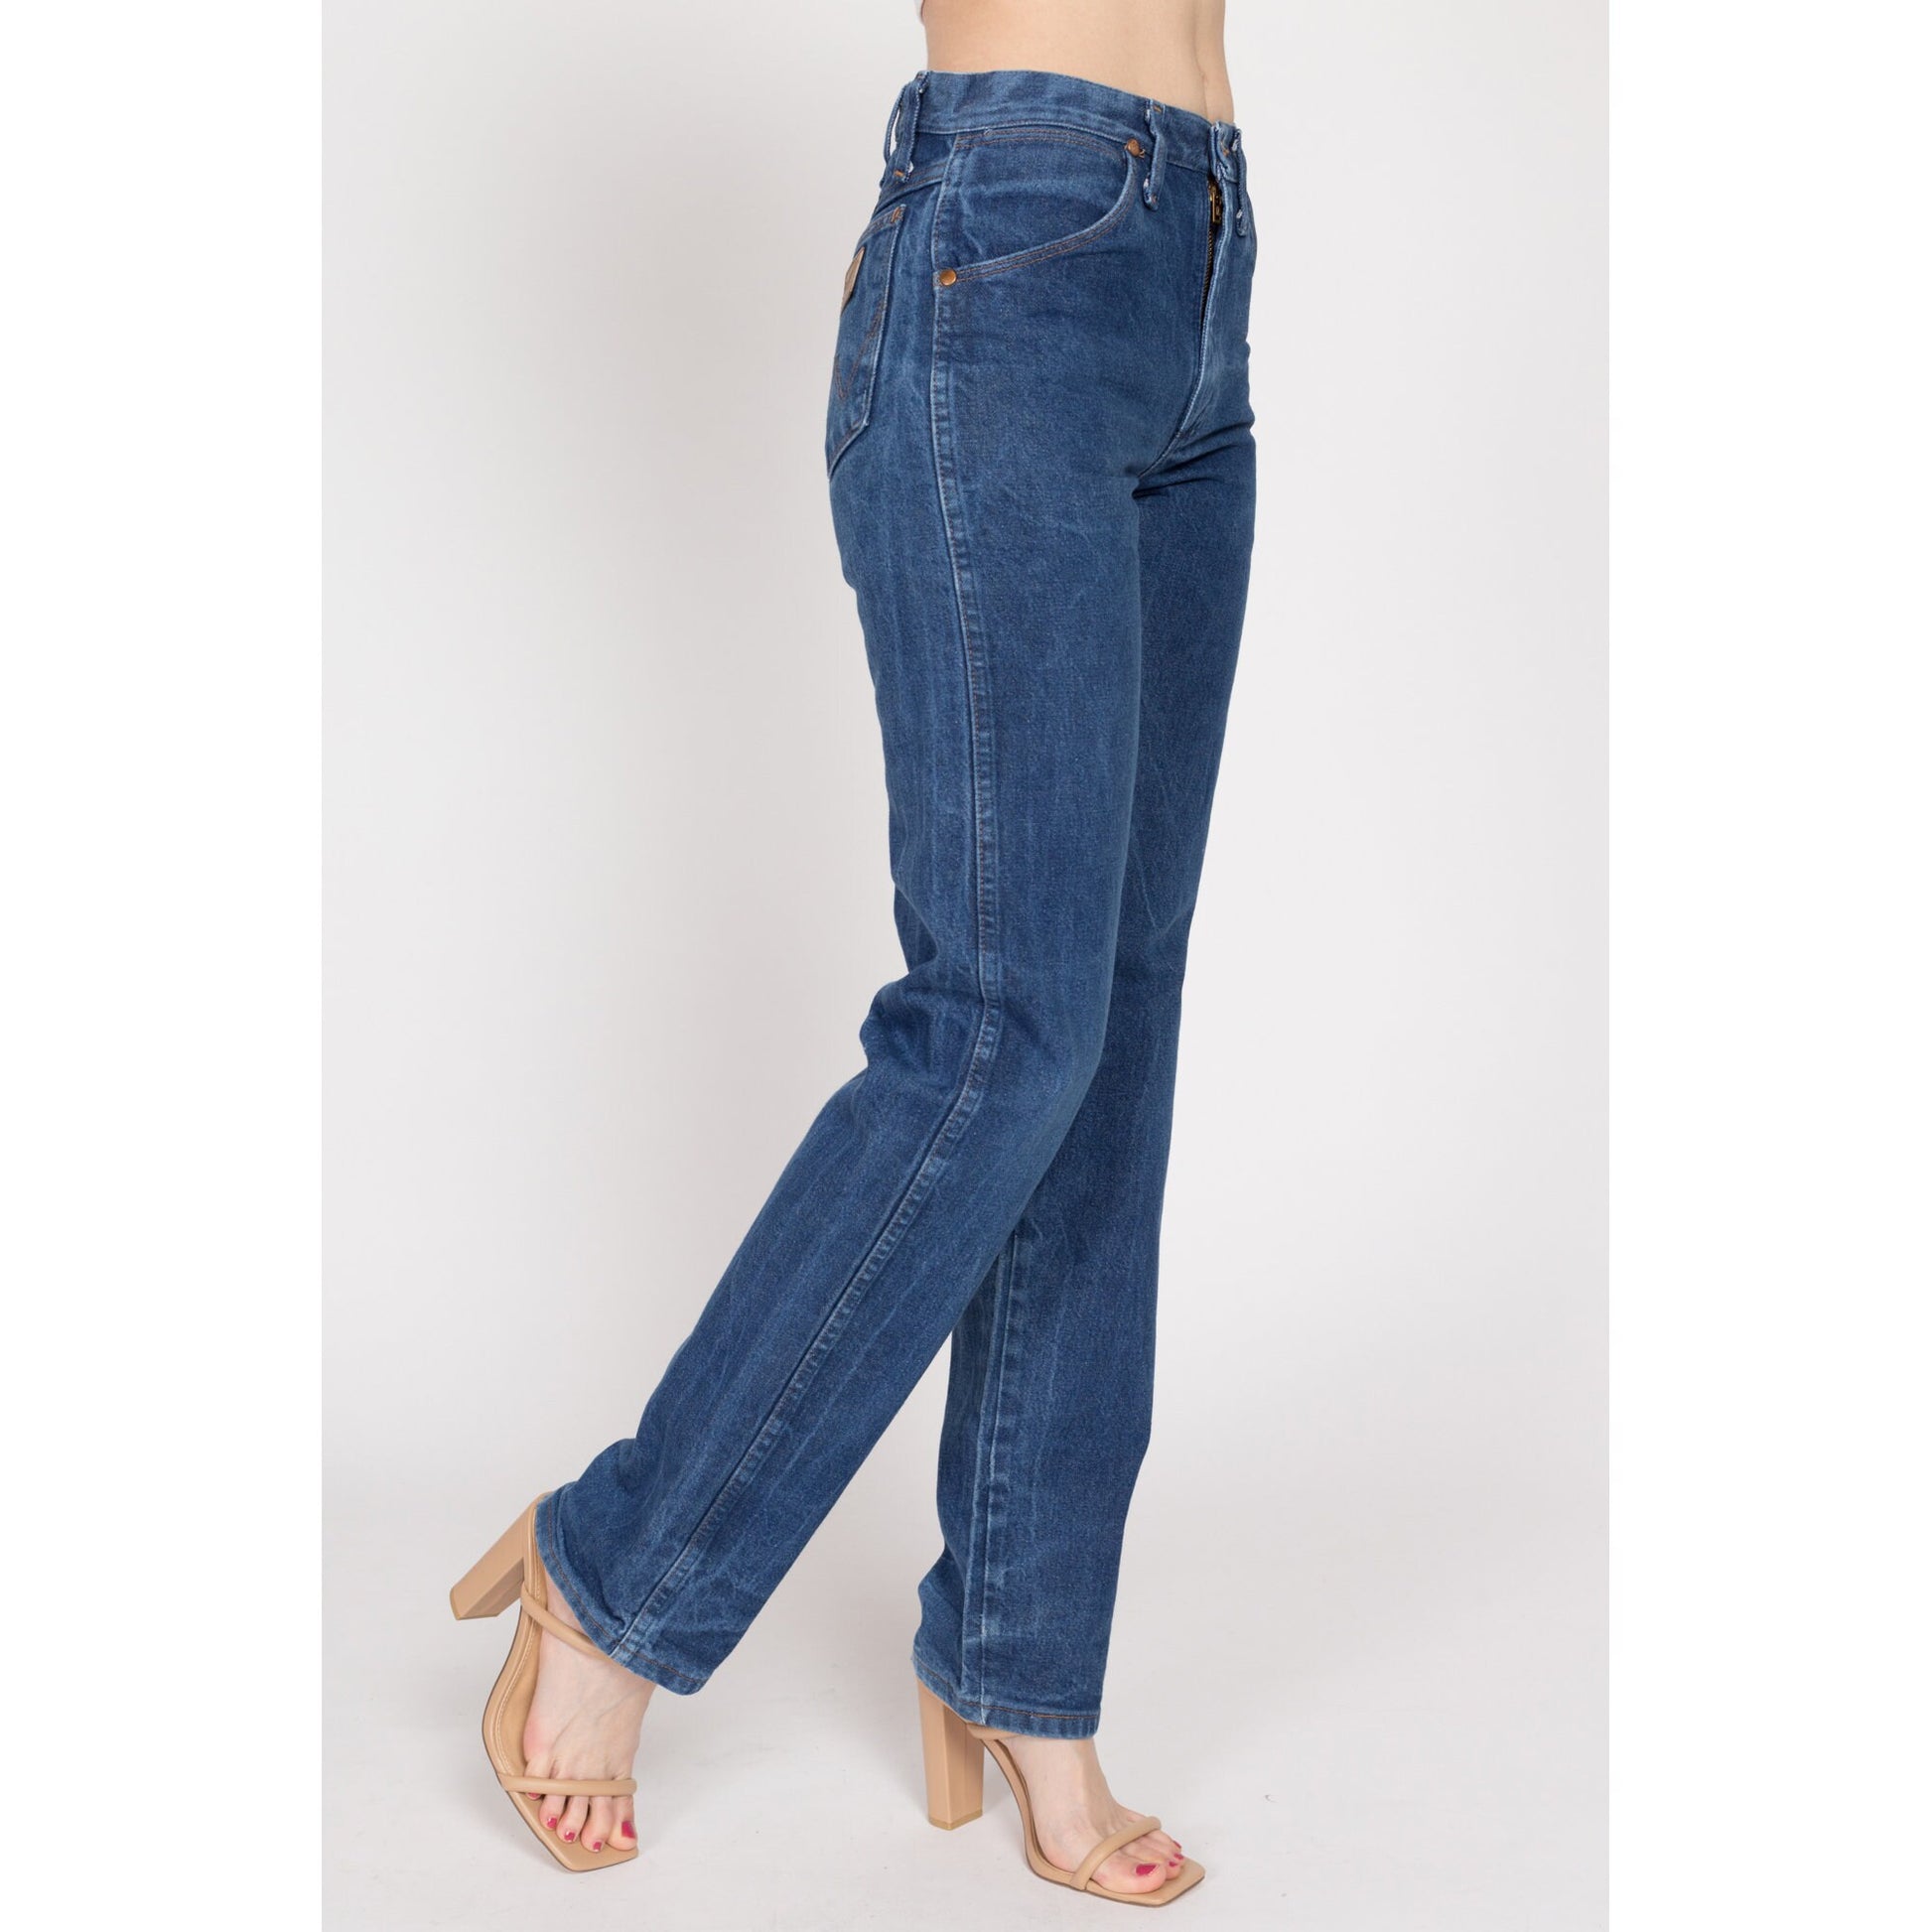 XS 90s Wrangler High Waisted Dark Wash Jeans | Vintage Denim Straight Leg Western Jeans